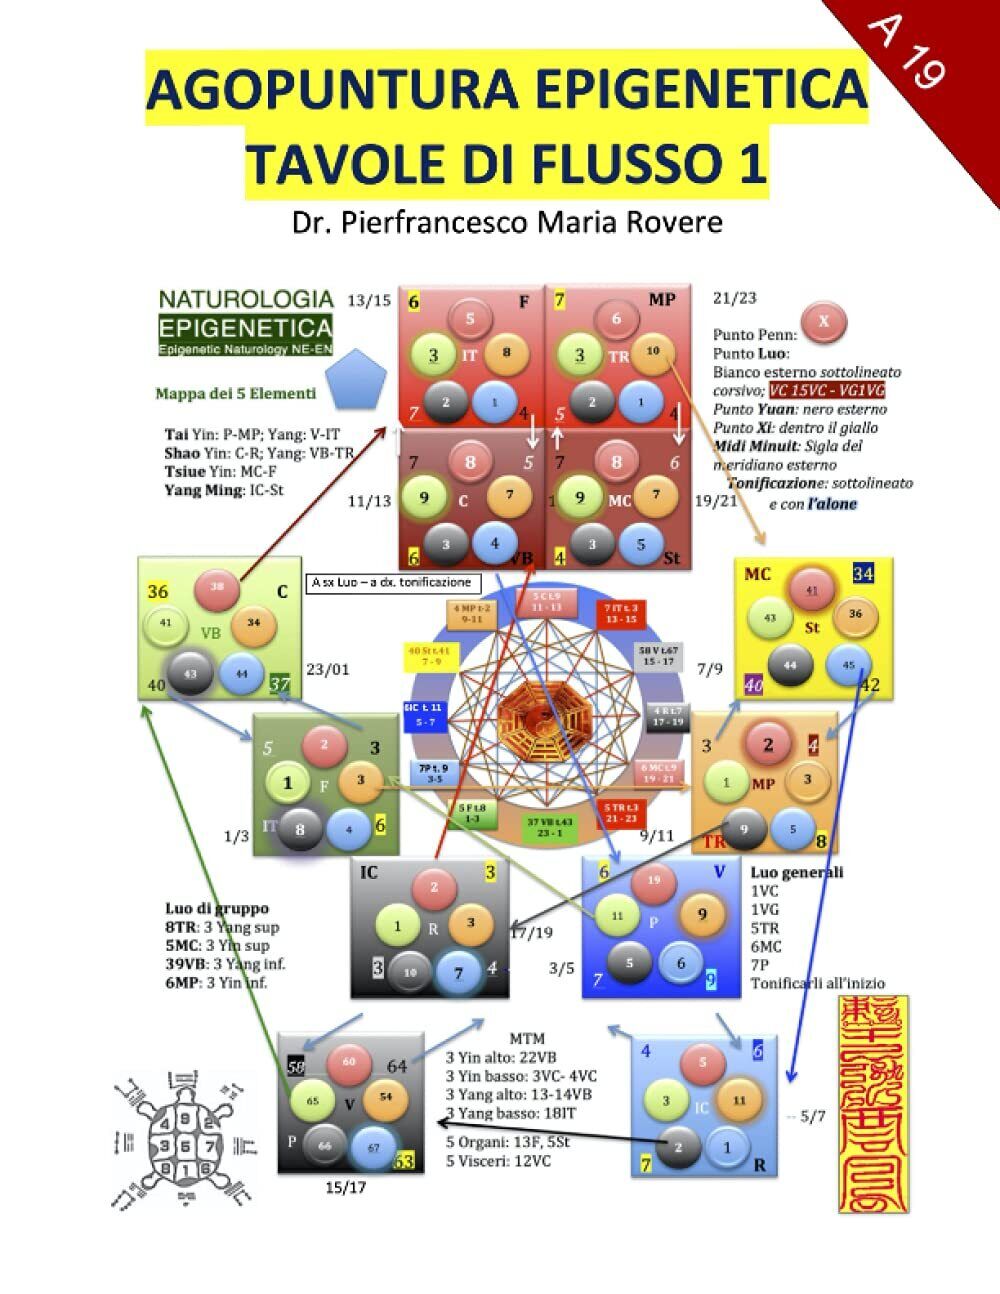 Agopuntura Epigenetica 1: Tavole di Flusso - Dr. Pierfrancesco Maria Rovere-2020